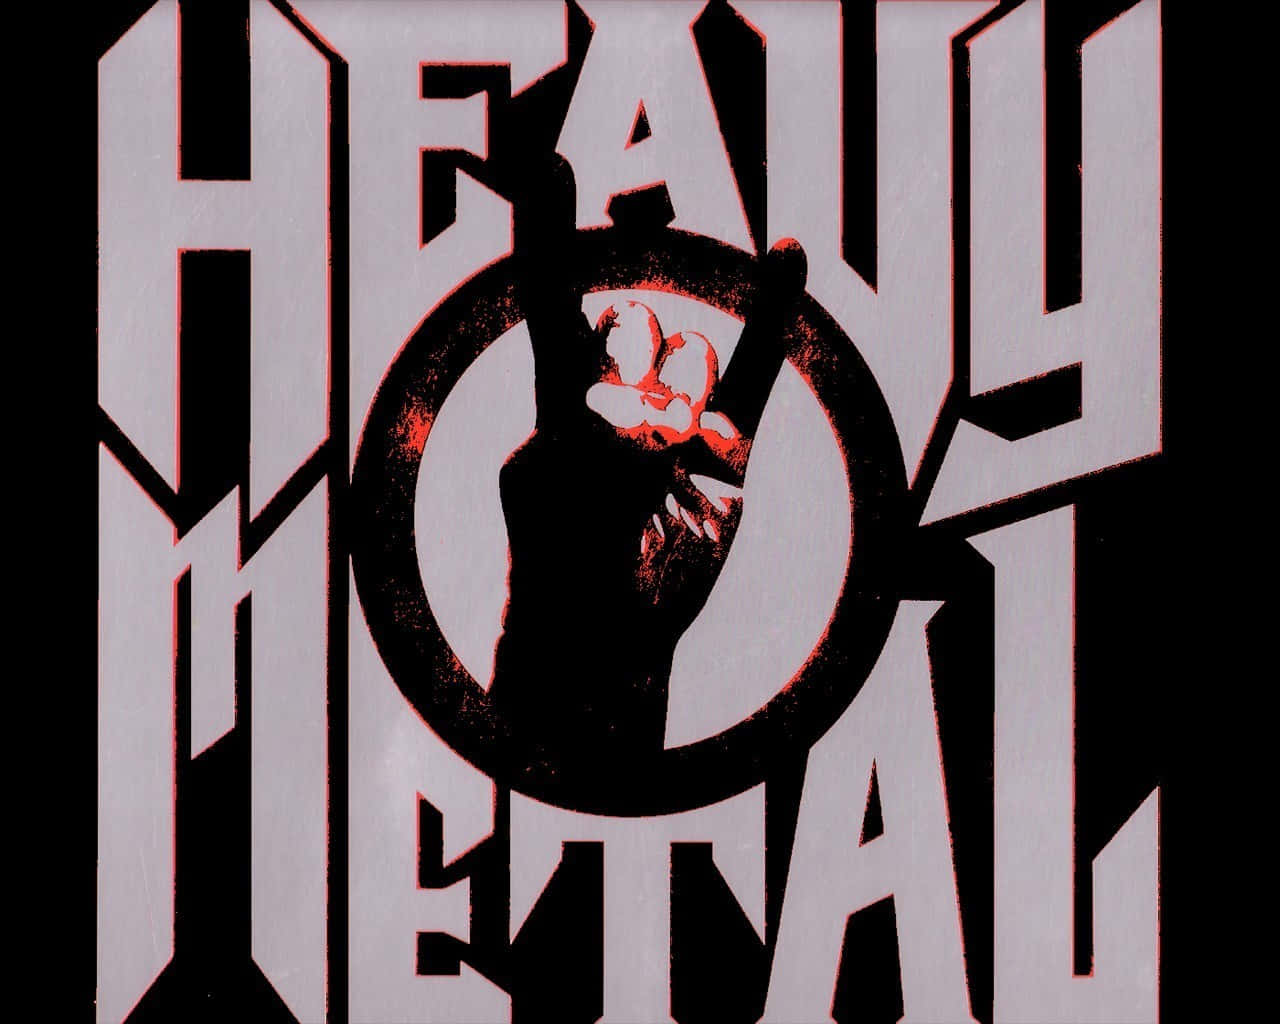 Heavy Metal [wallpaper]